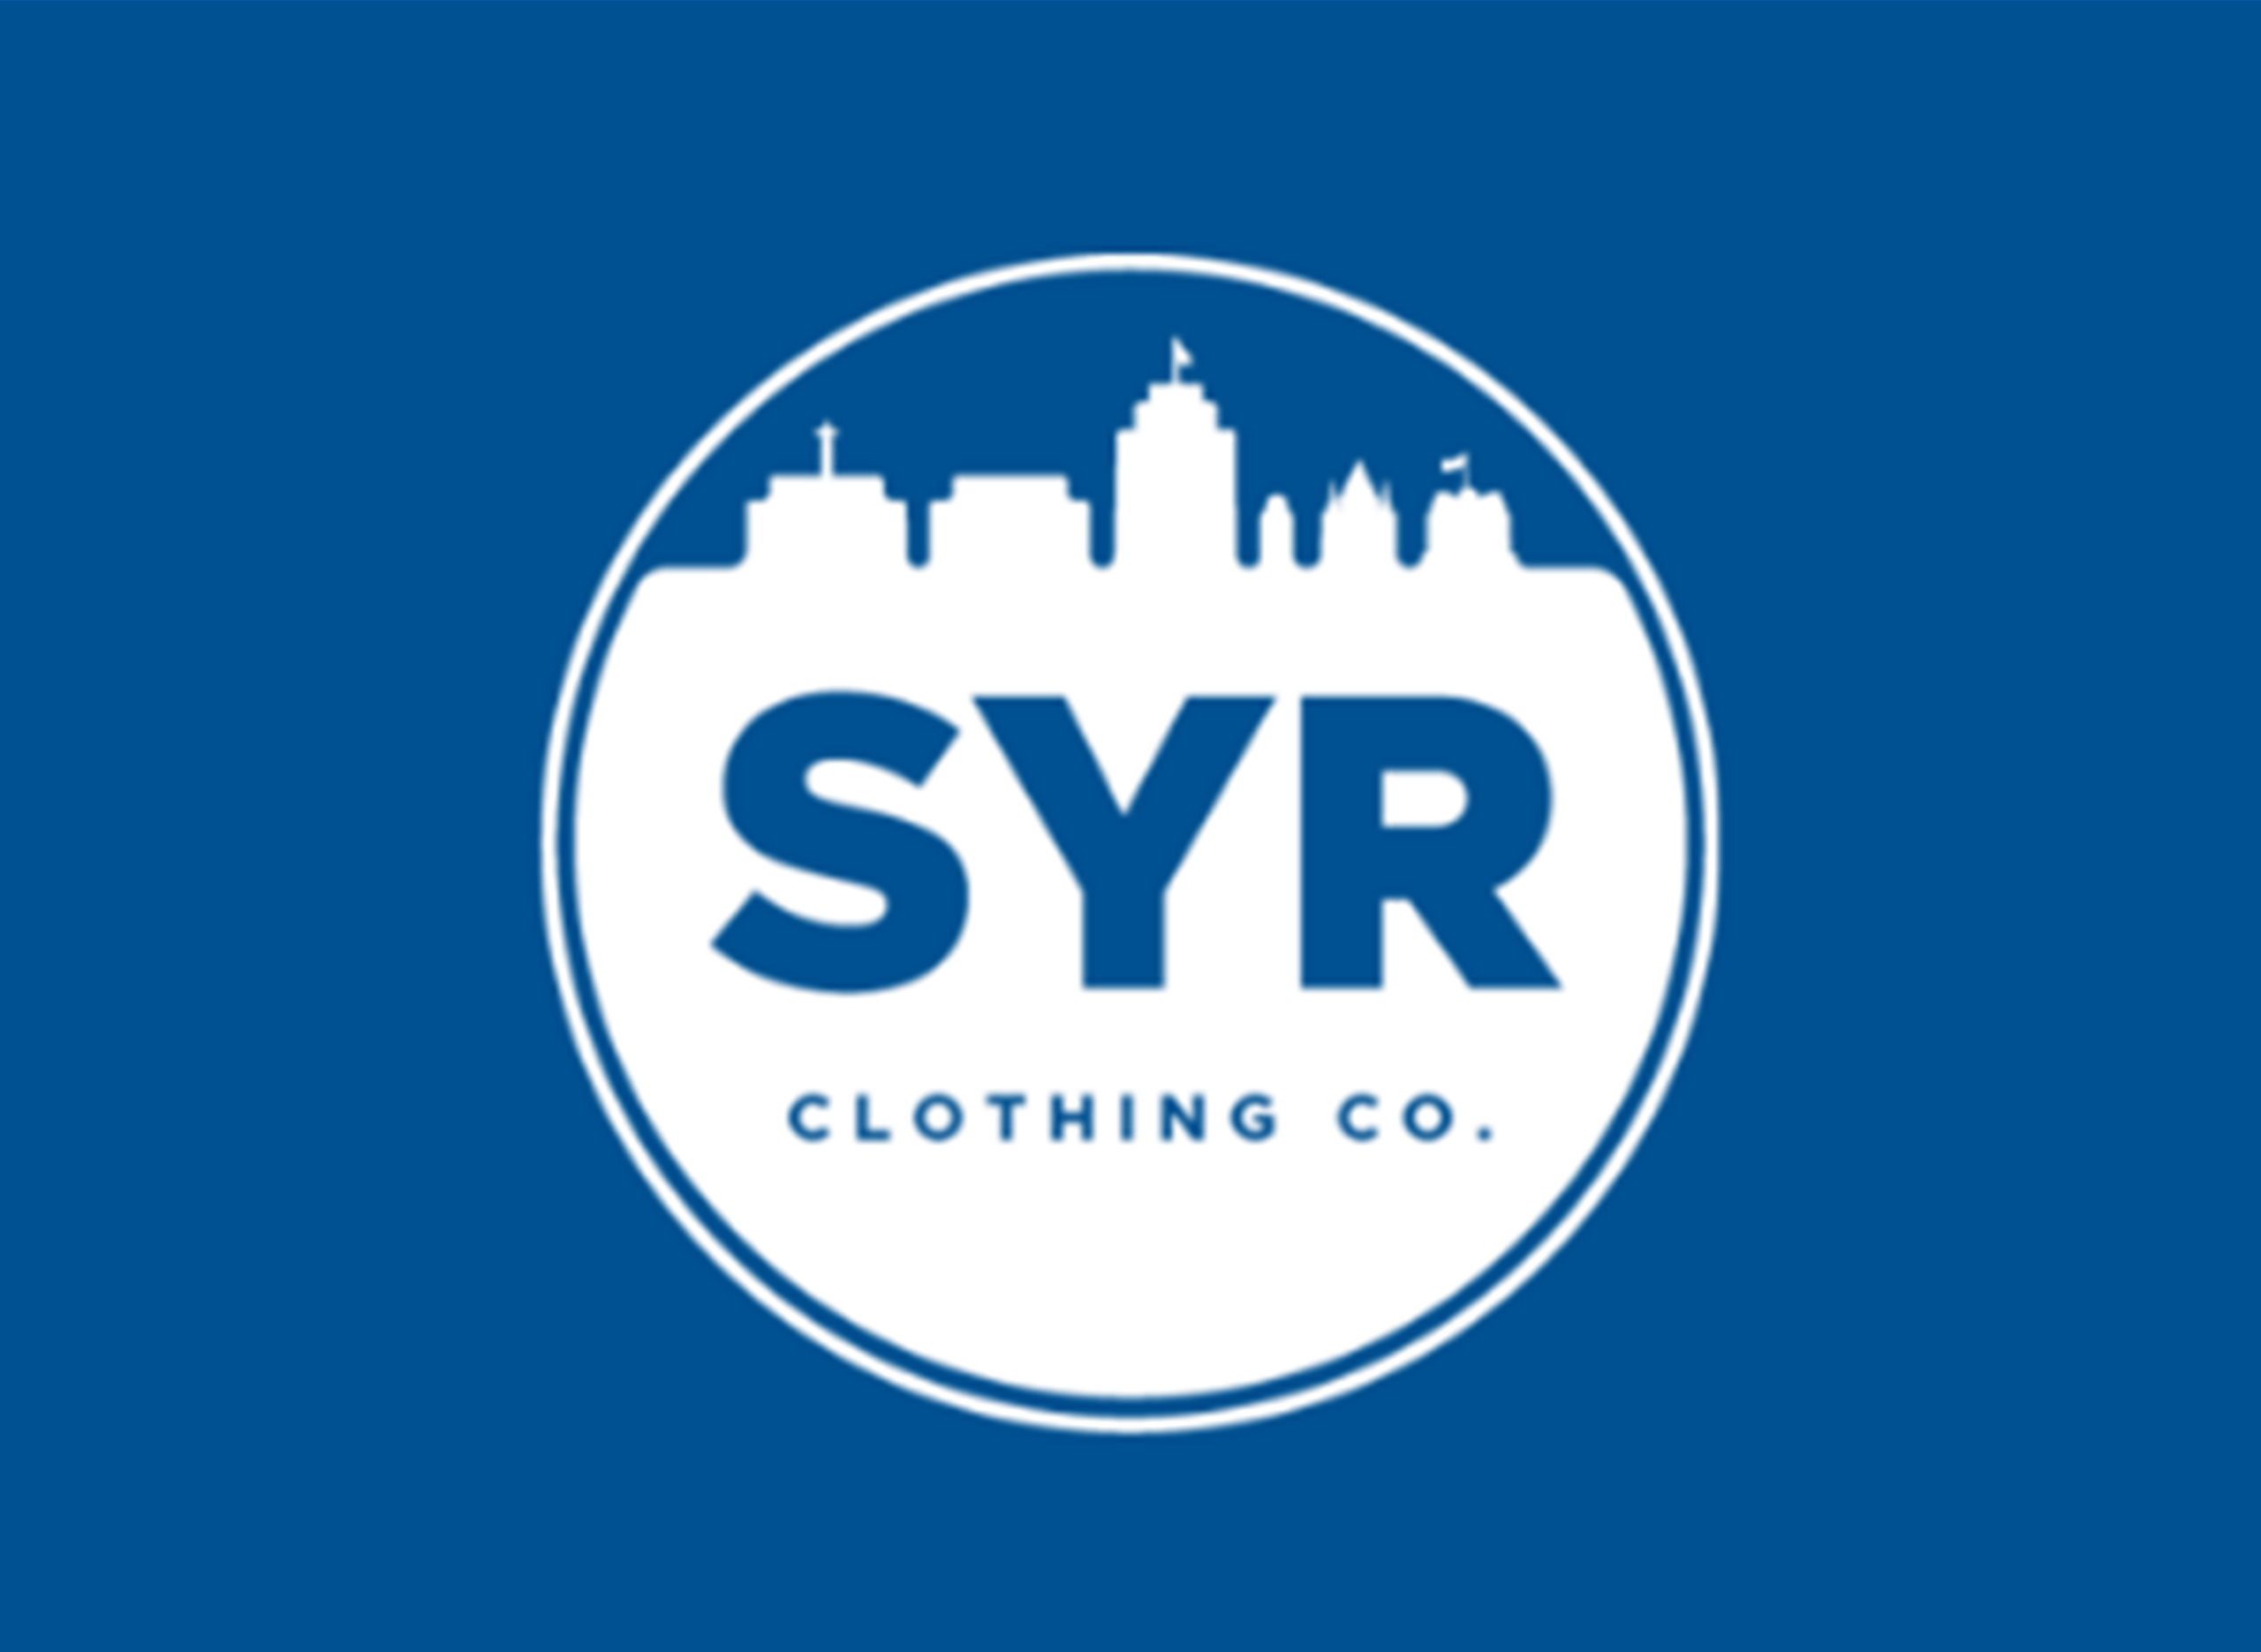 Why I Give United: Matt & Taylor | SYR Clothing Co.